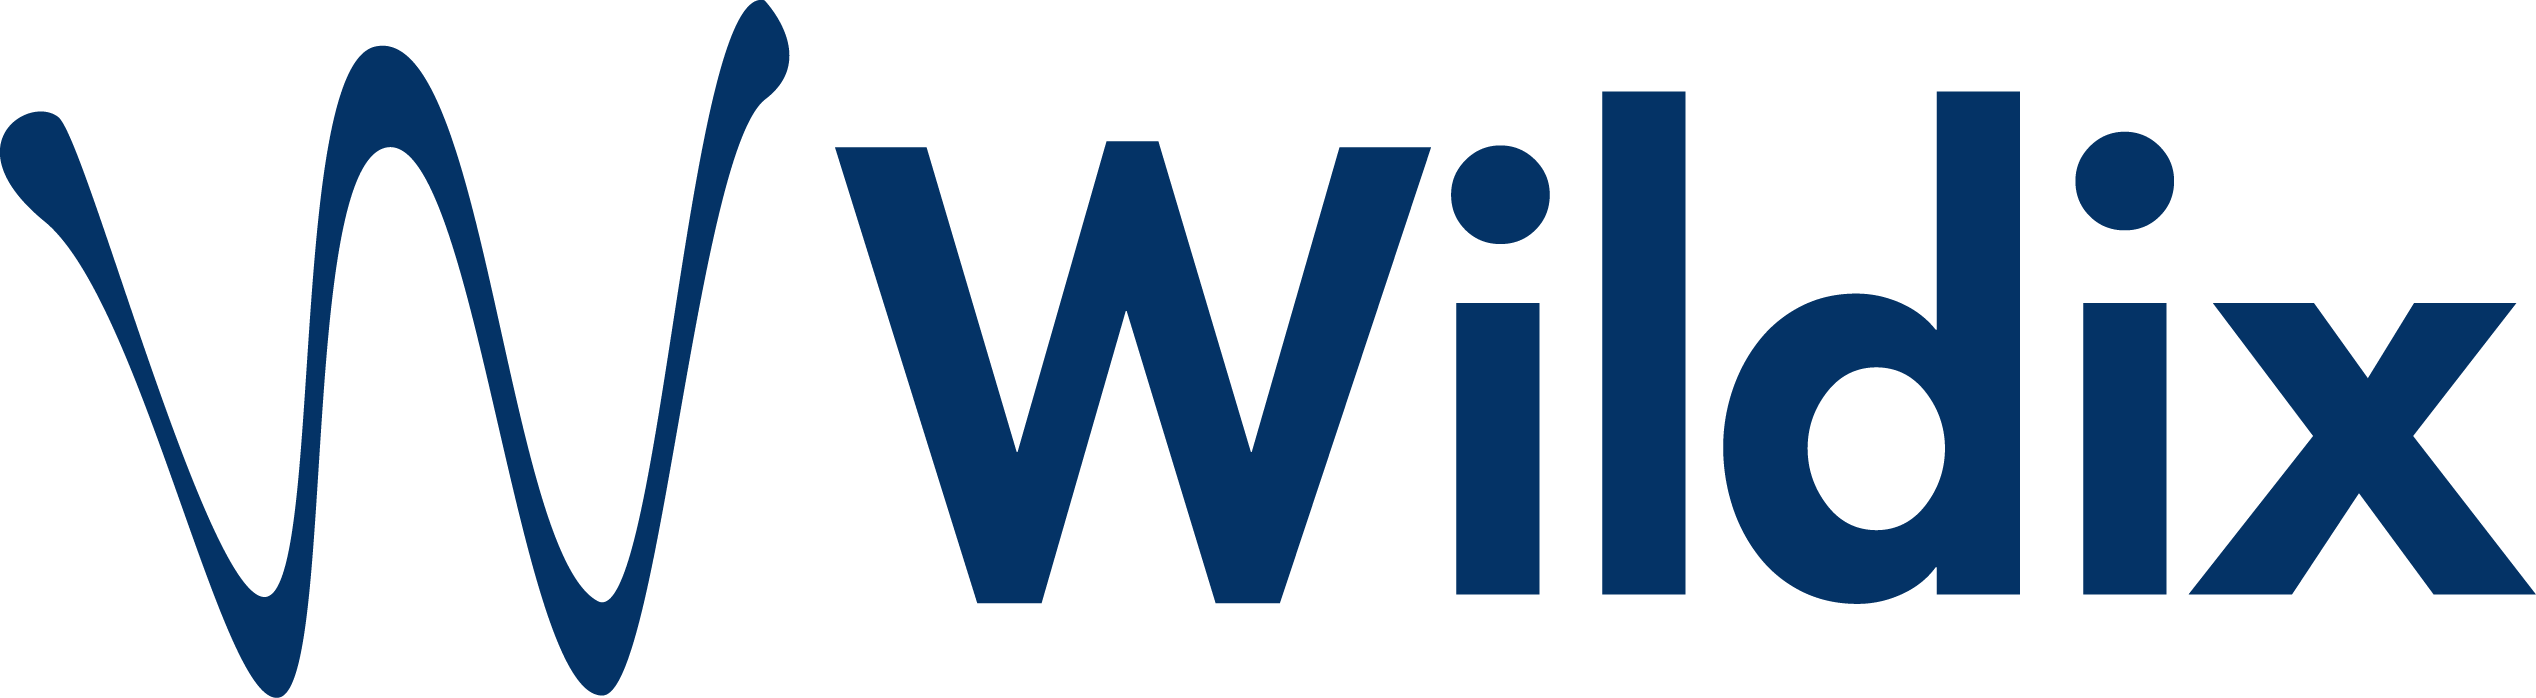 logo-wildix